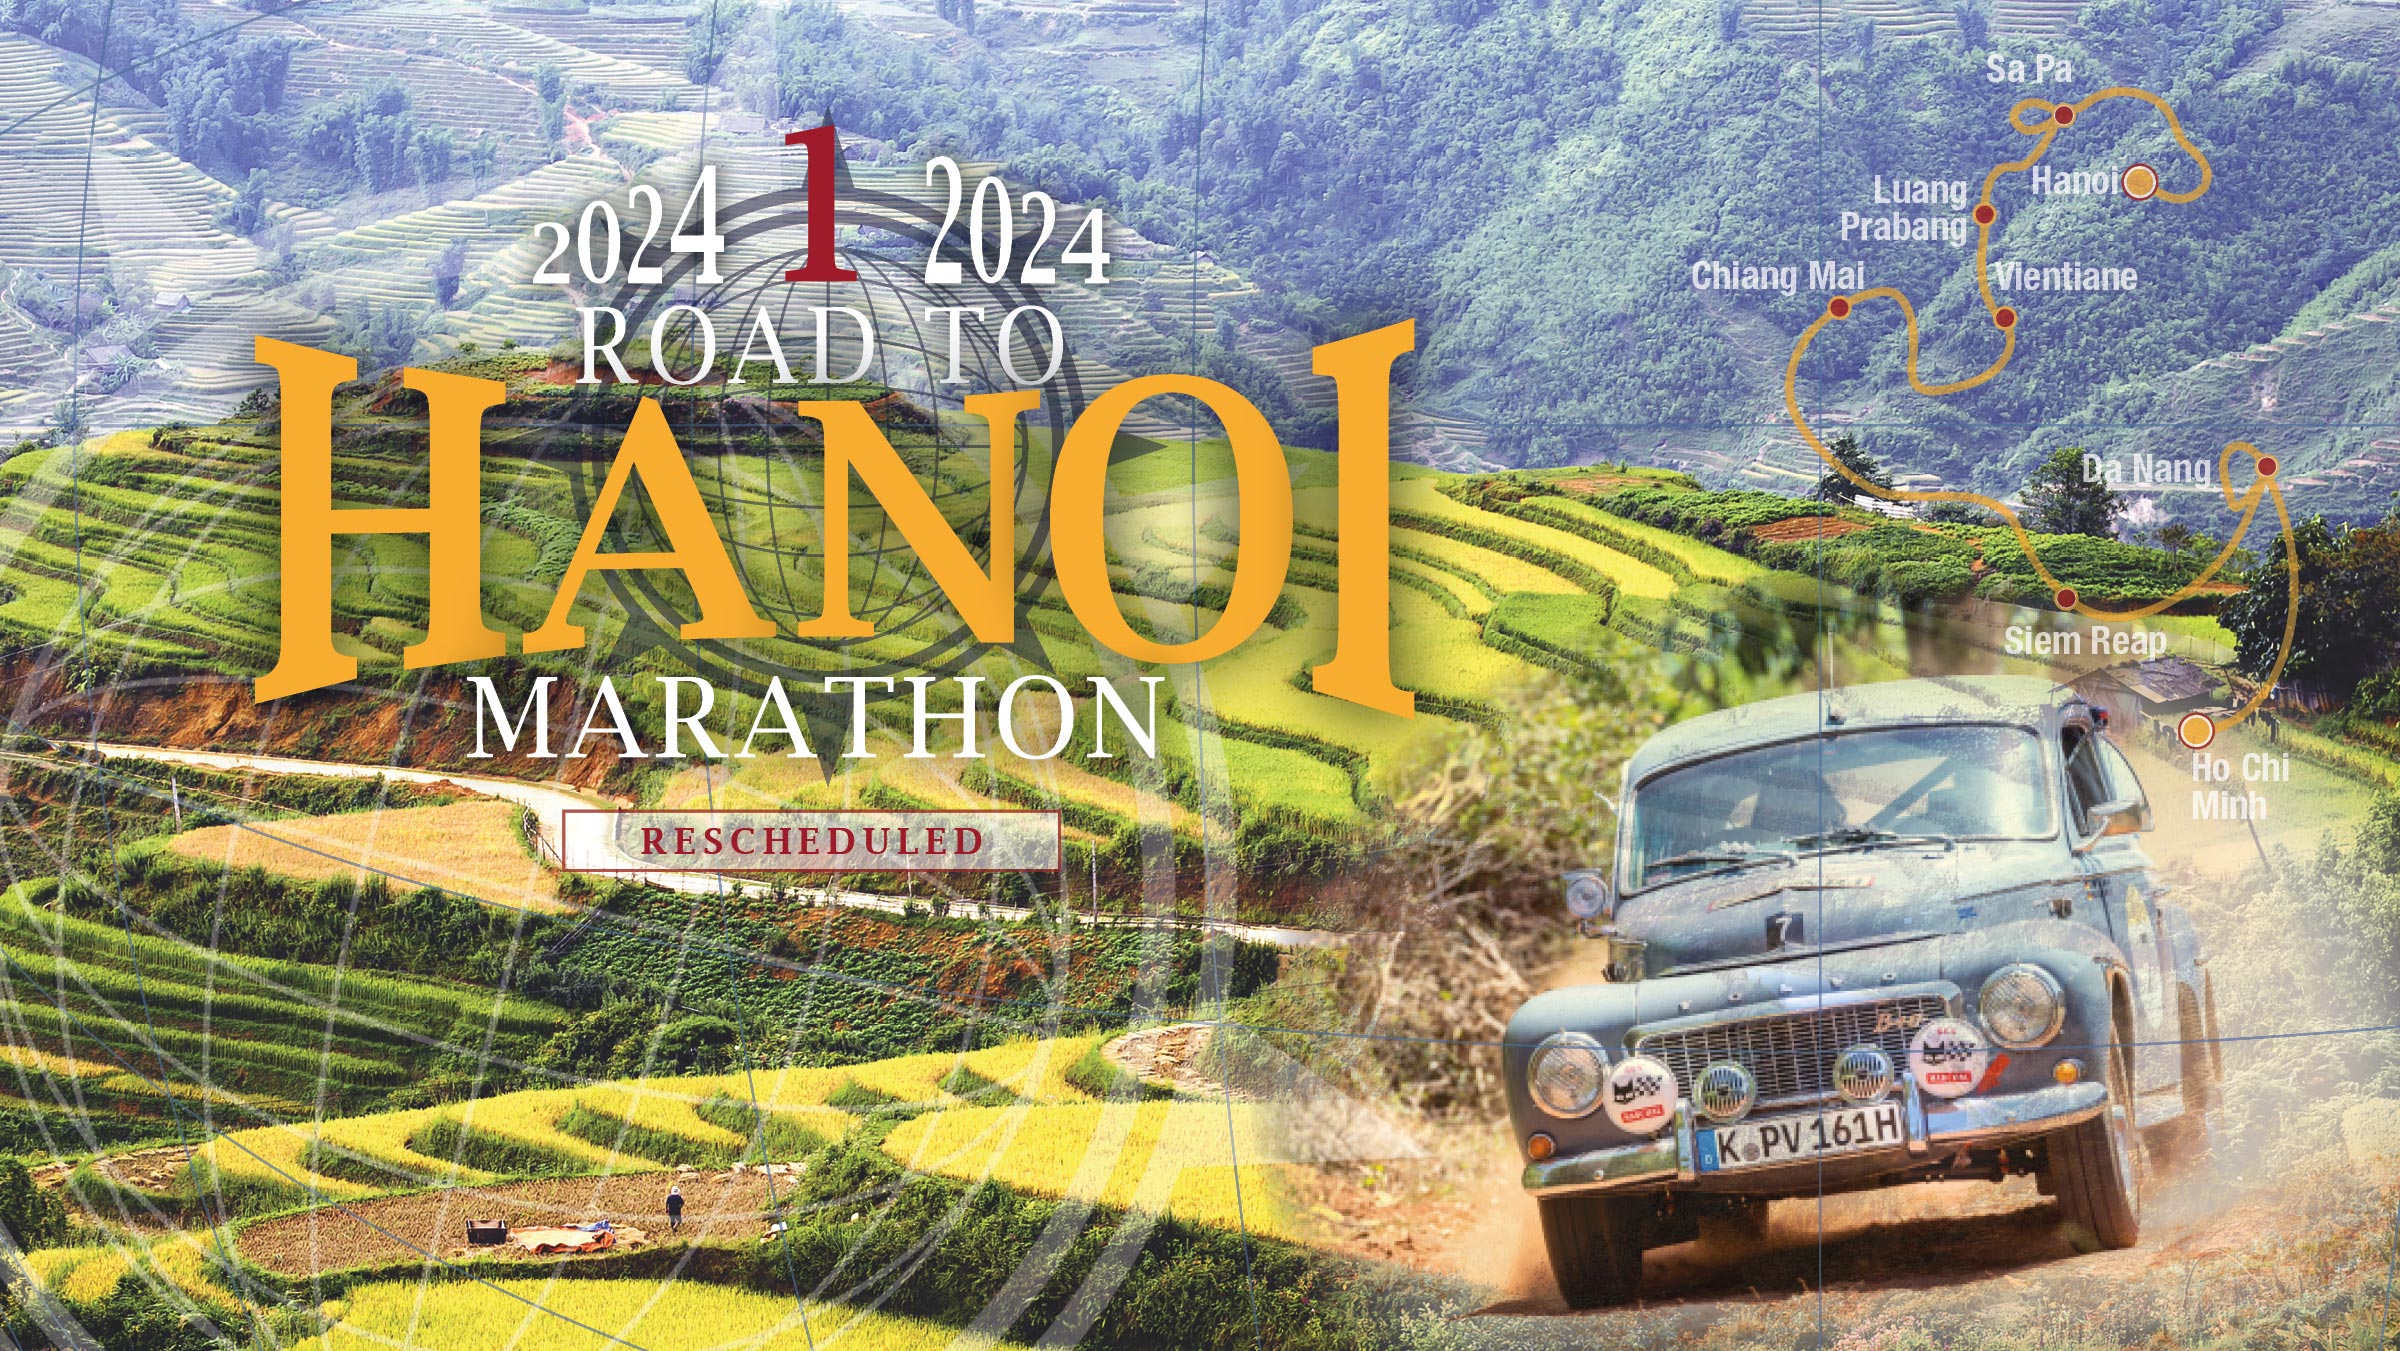 Road to Hanoi Marathon - Rally the Globe